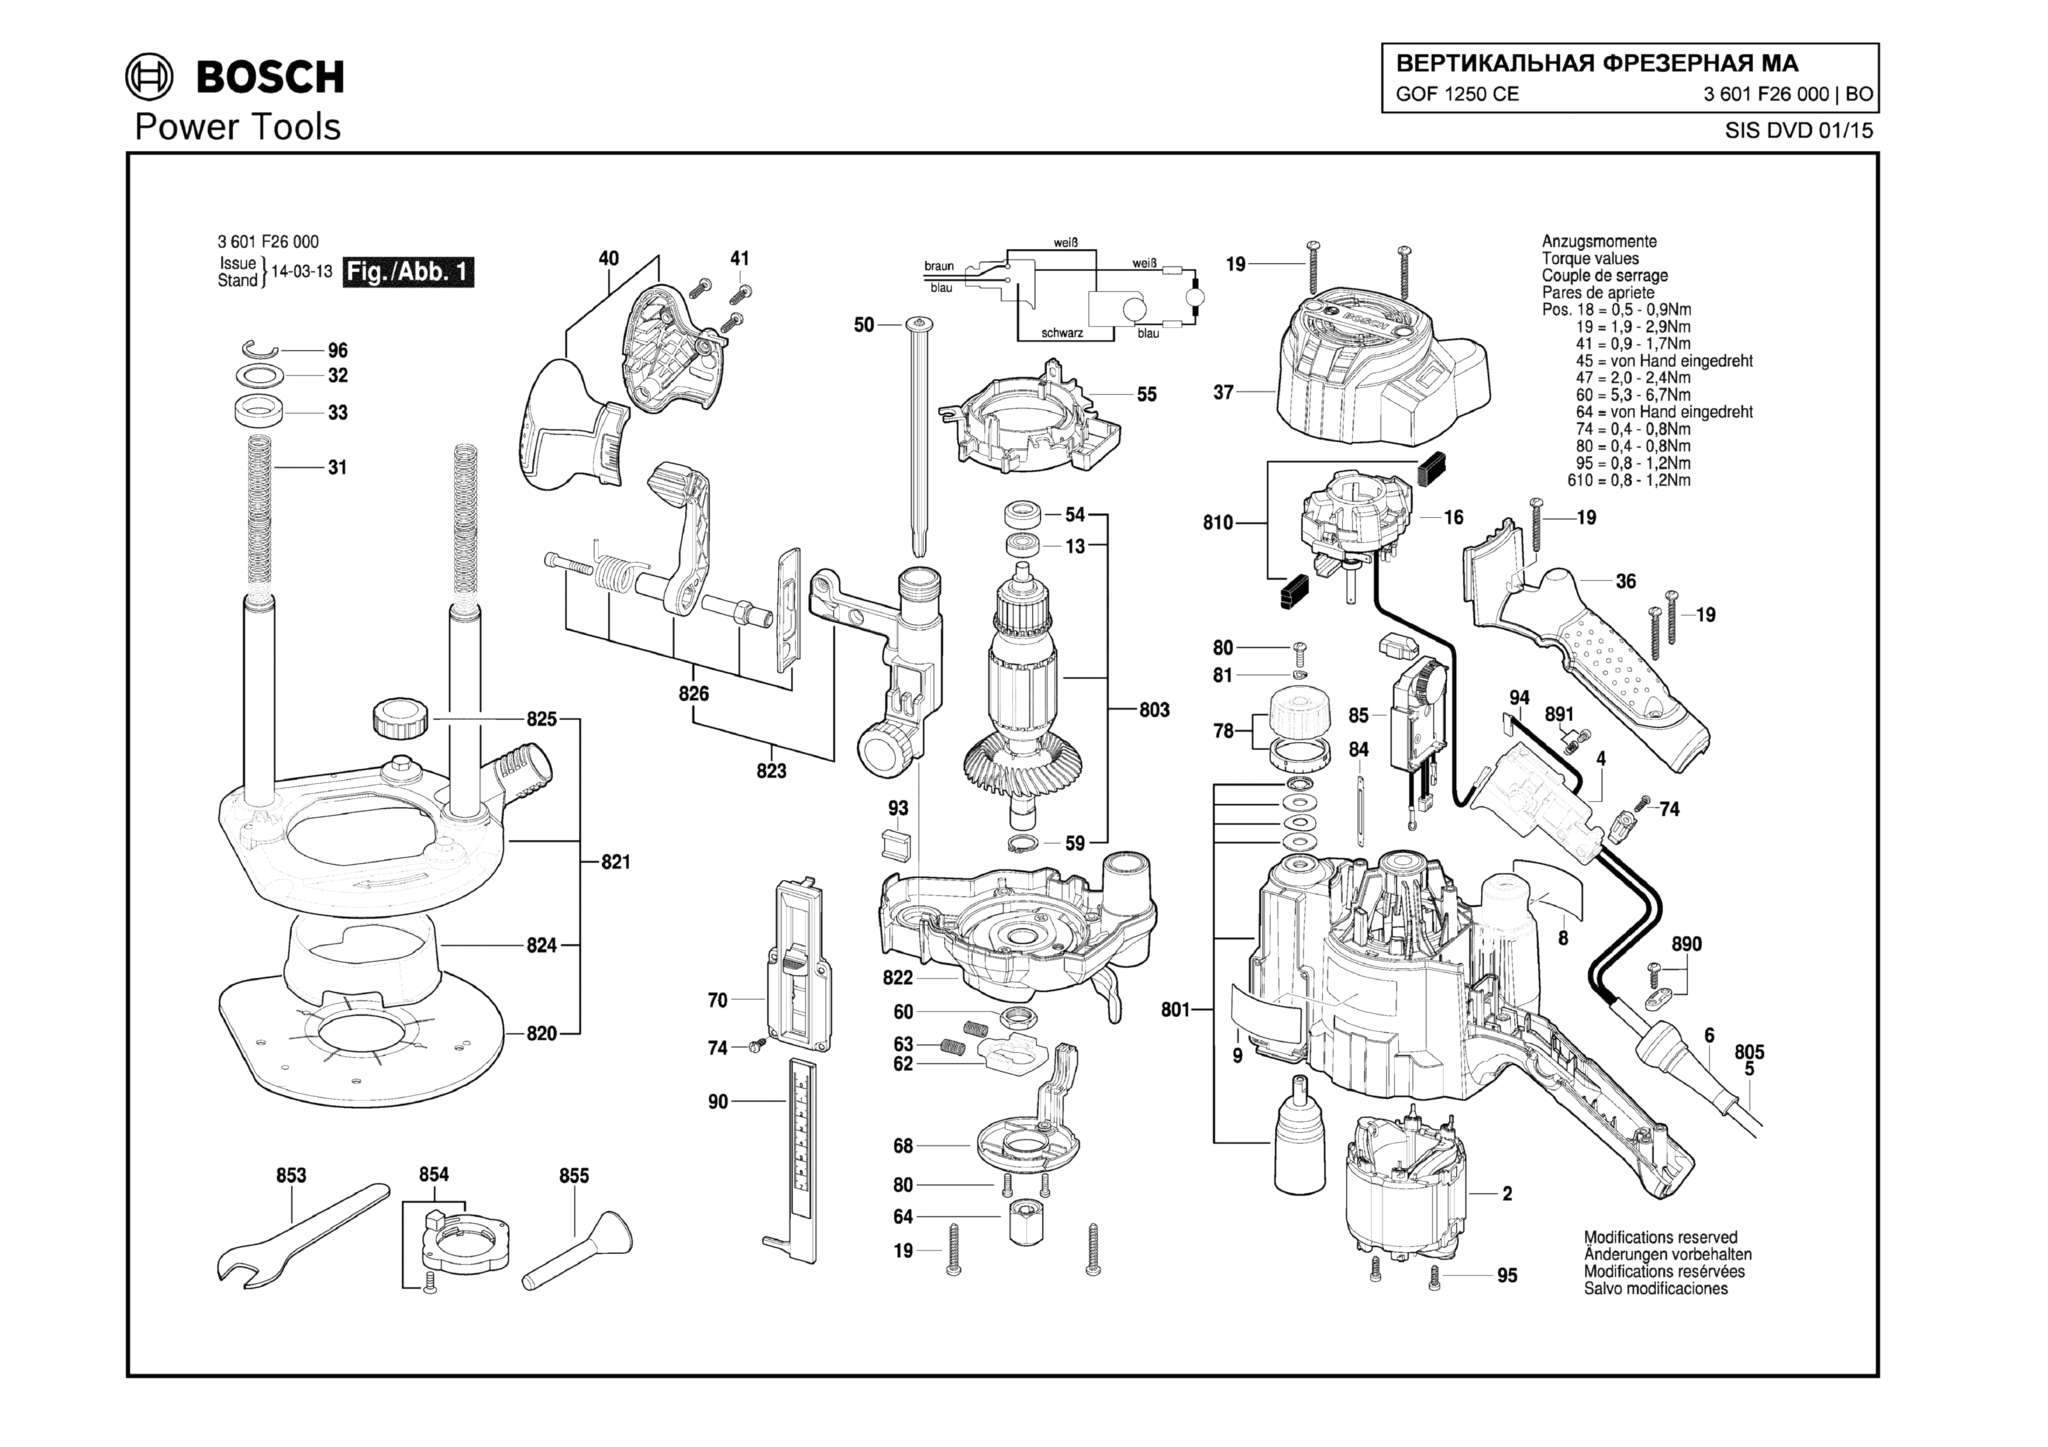 Запчасти, схема и деталировка Bosch GOF 1250 CE (ТИП 3601F26000)